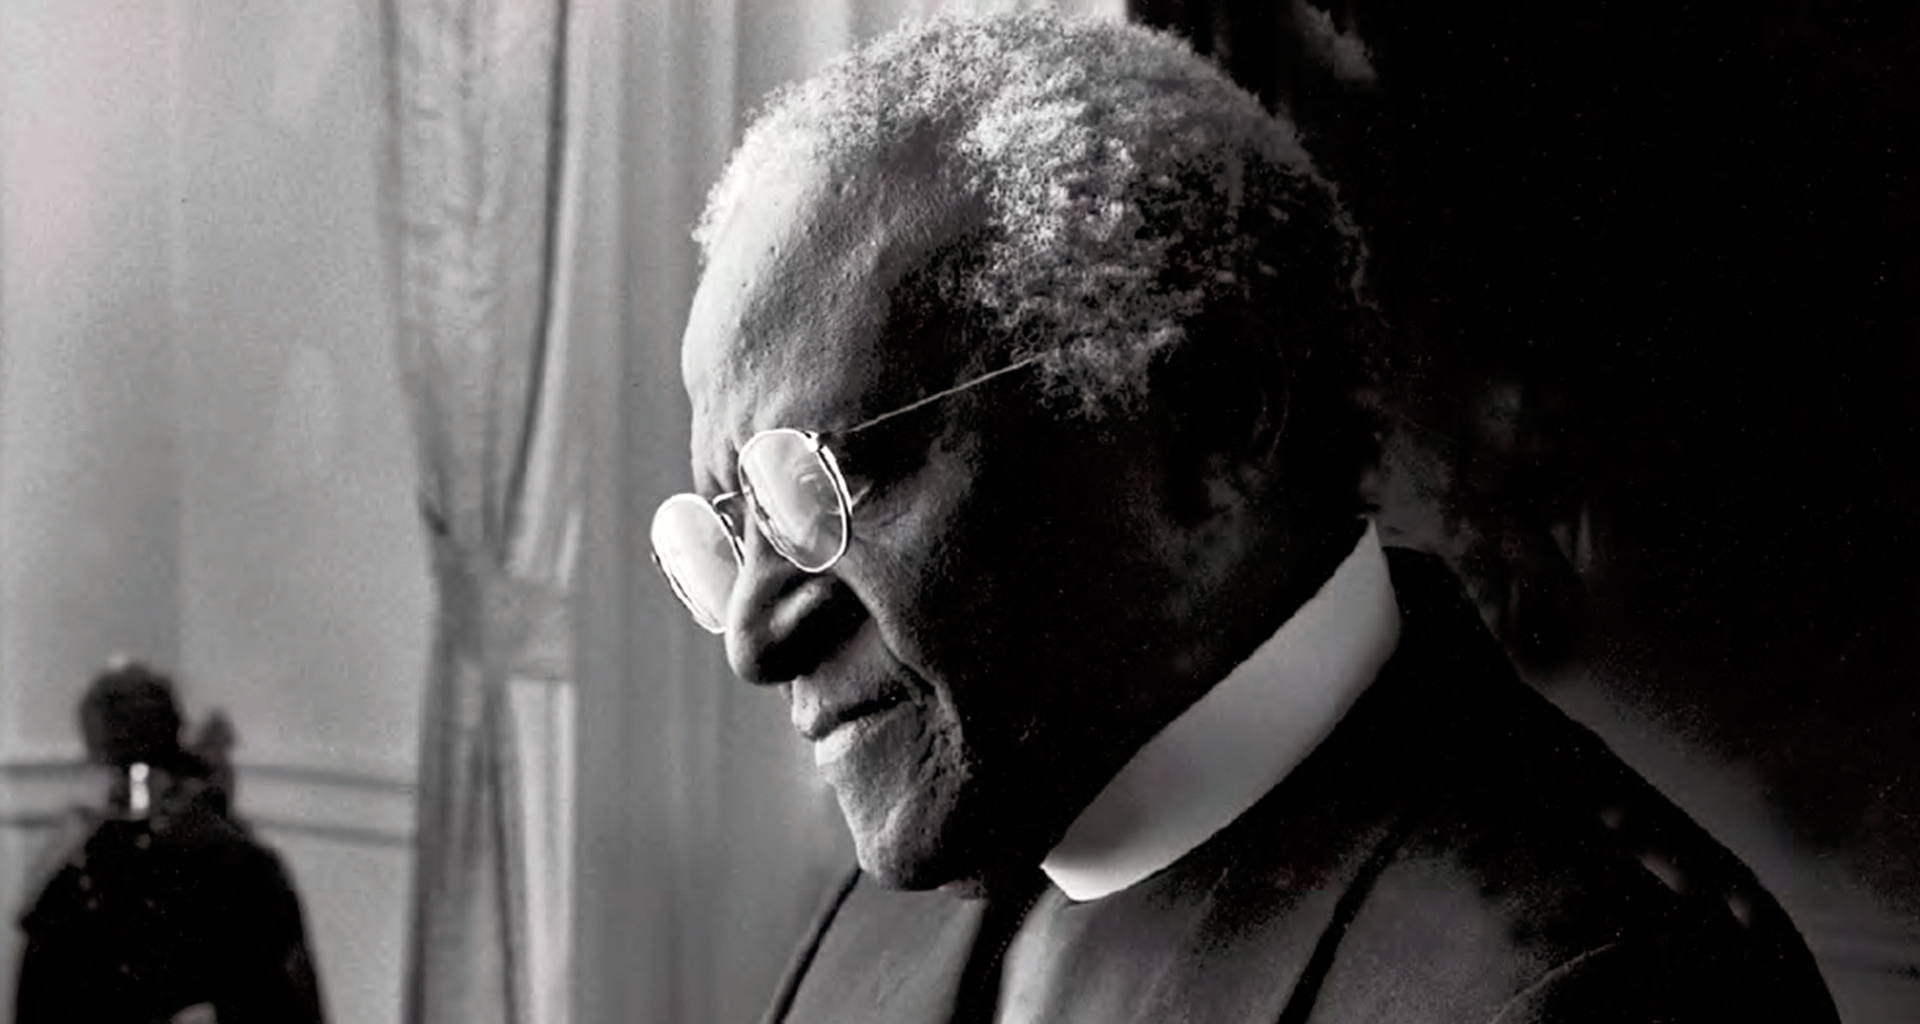 RFKSpain Archbishop Desmond Tutu has left us